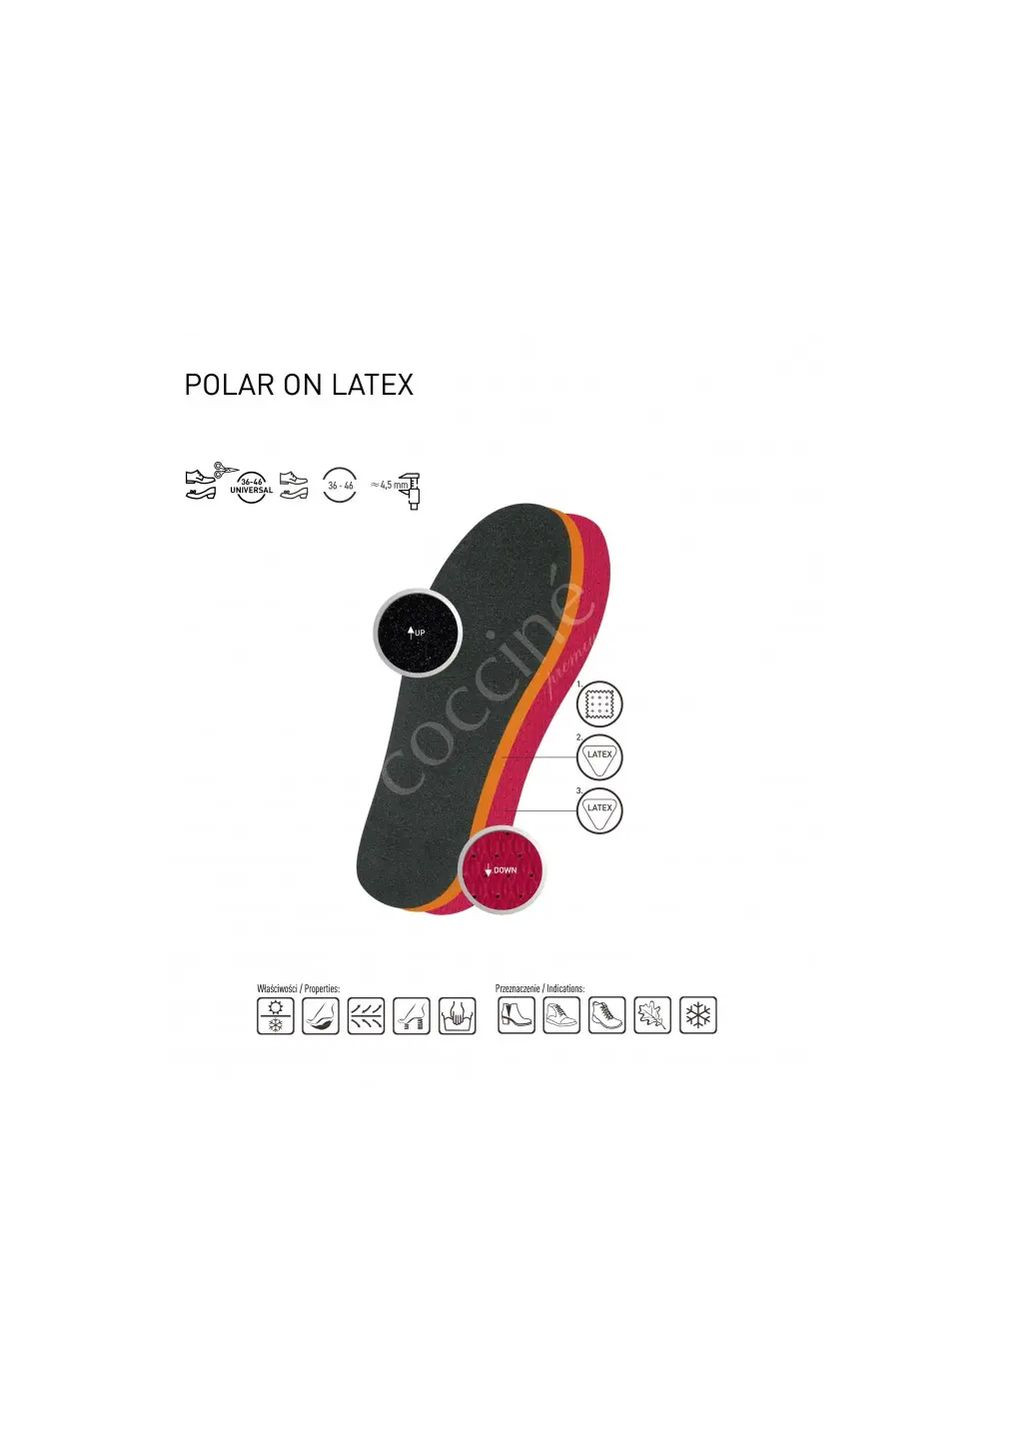 Стельки детские зимние флис на латексе Coccine polar on latex (283250490)